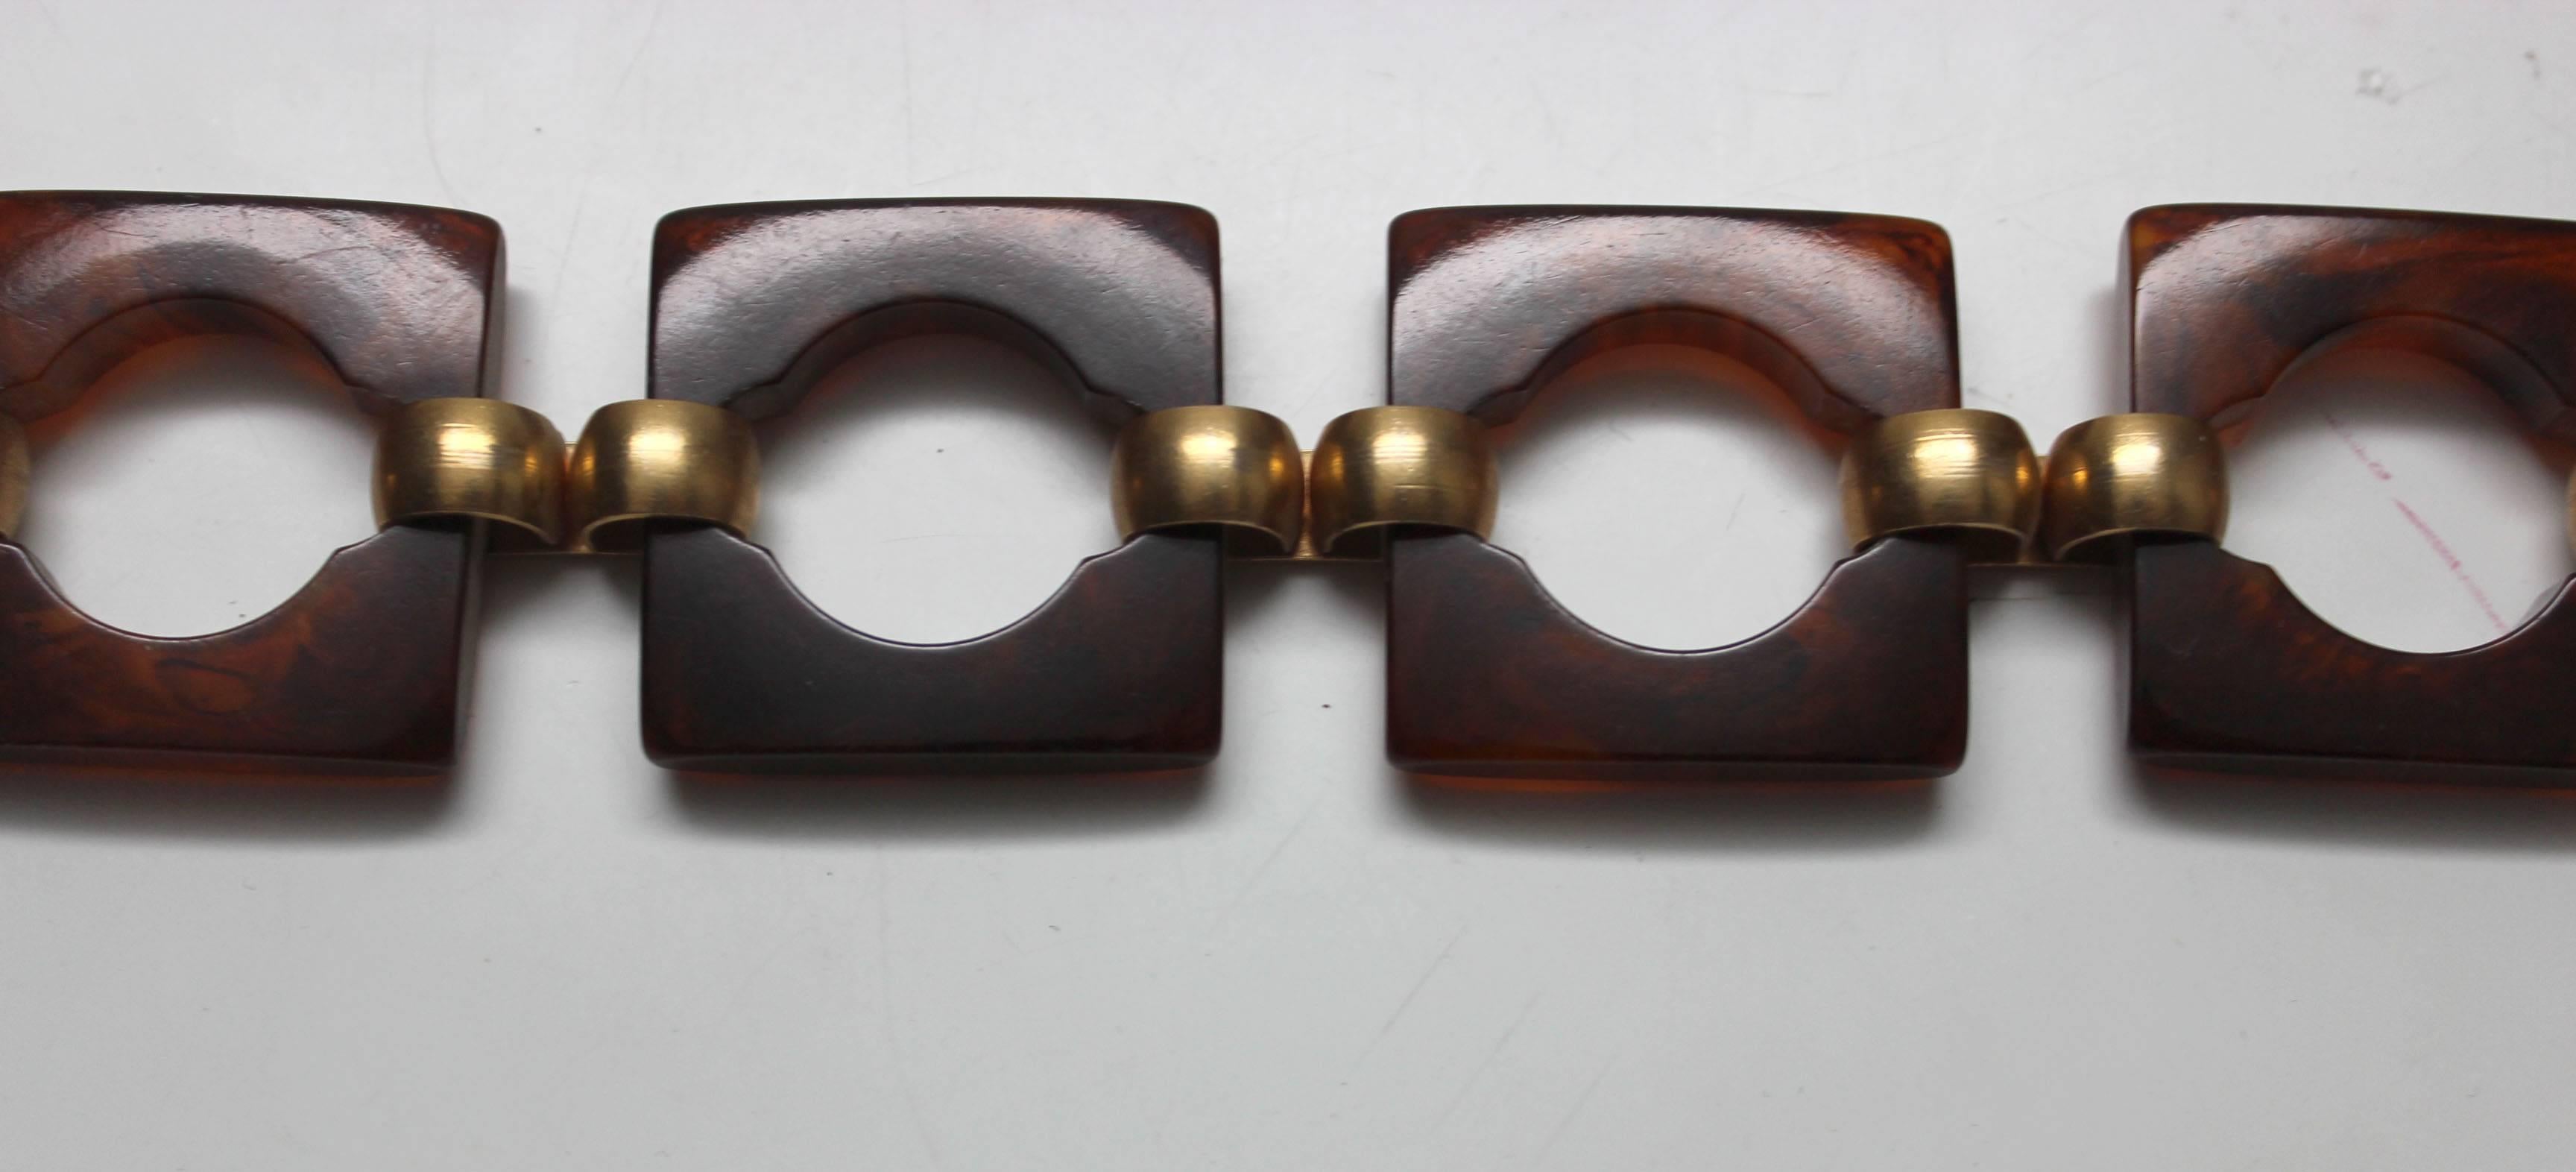 Yves Saint Laurent 1970s Tortoise/Acrylic Geometric Chain Belt For Sale 1